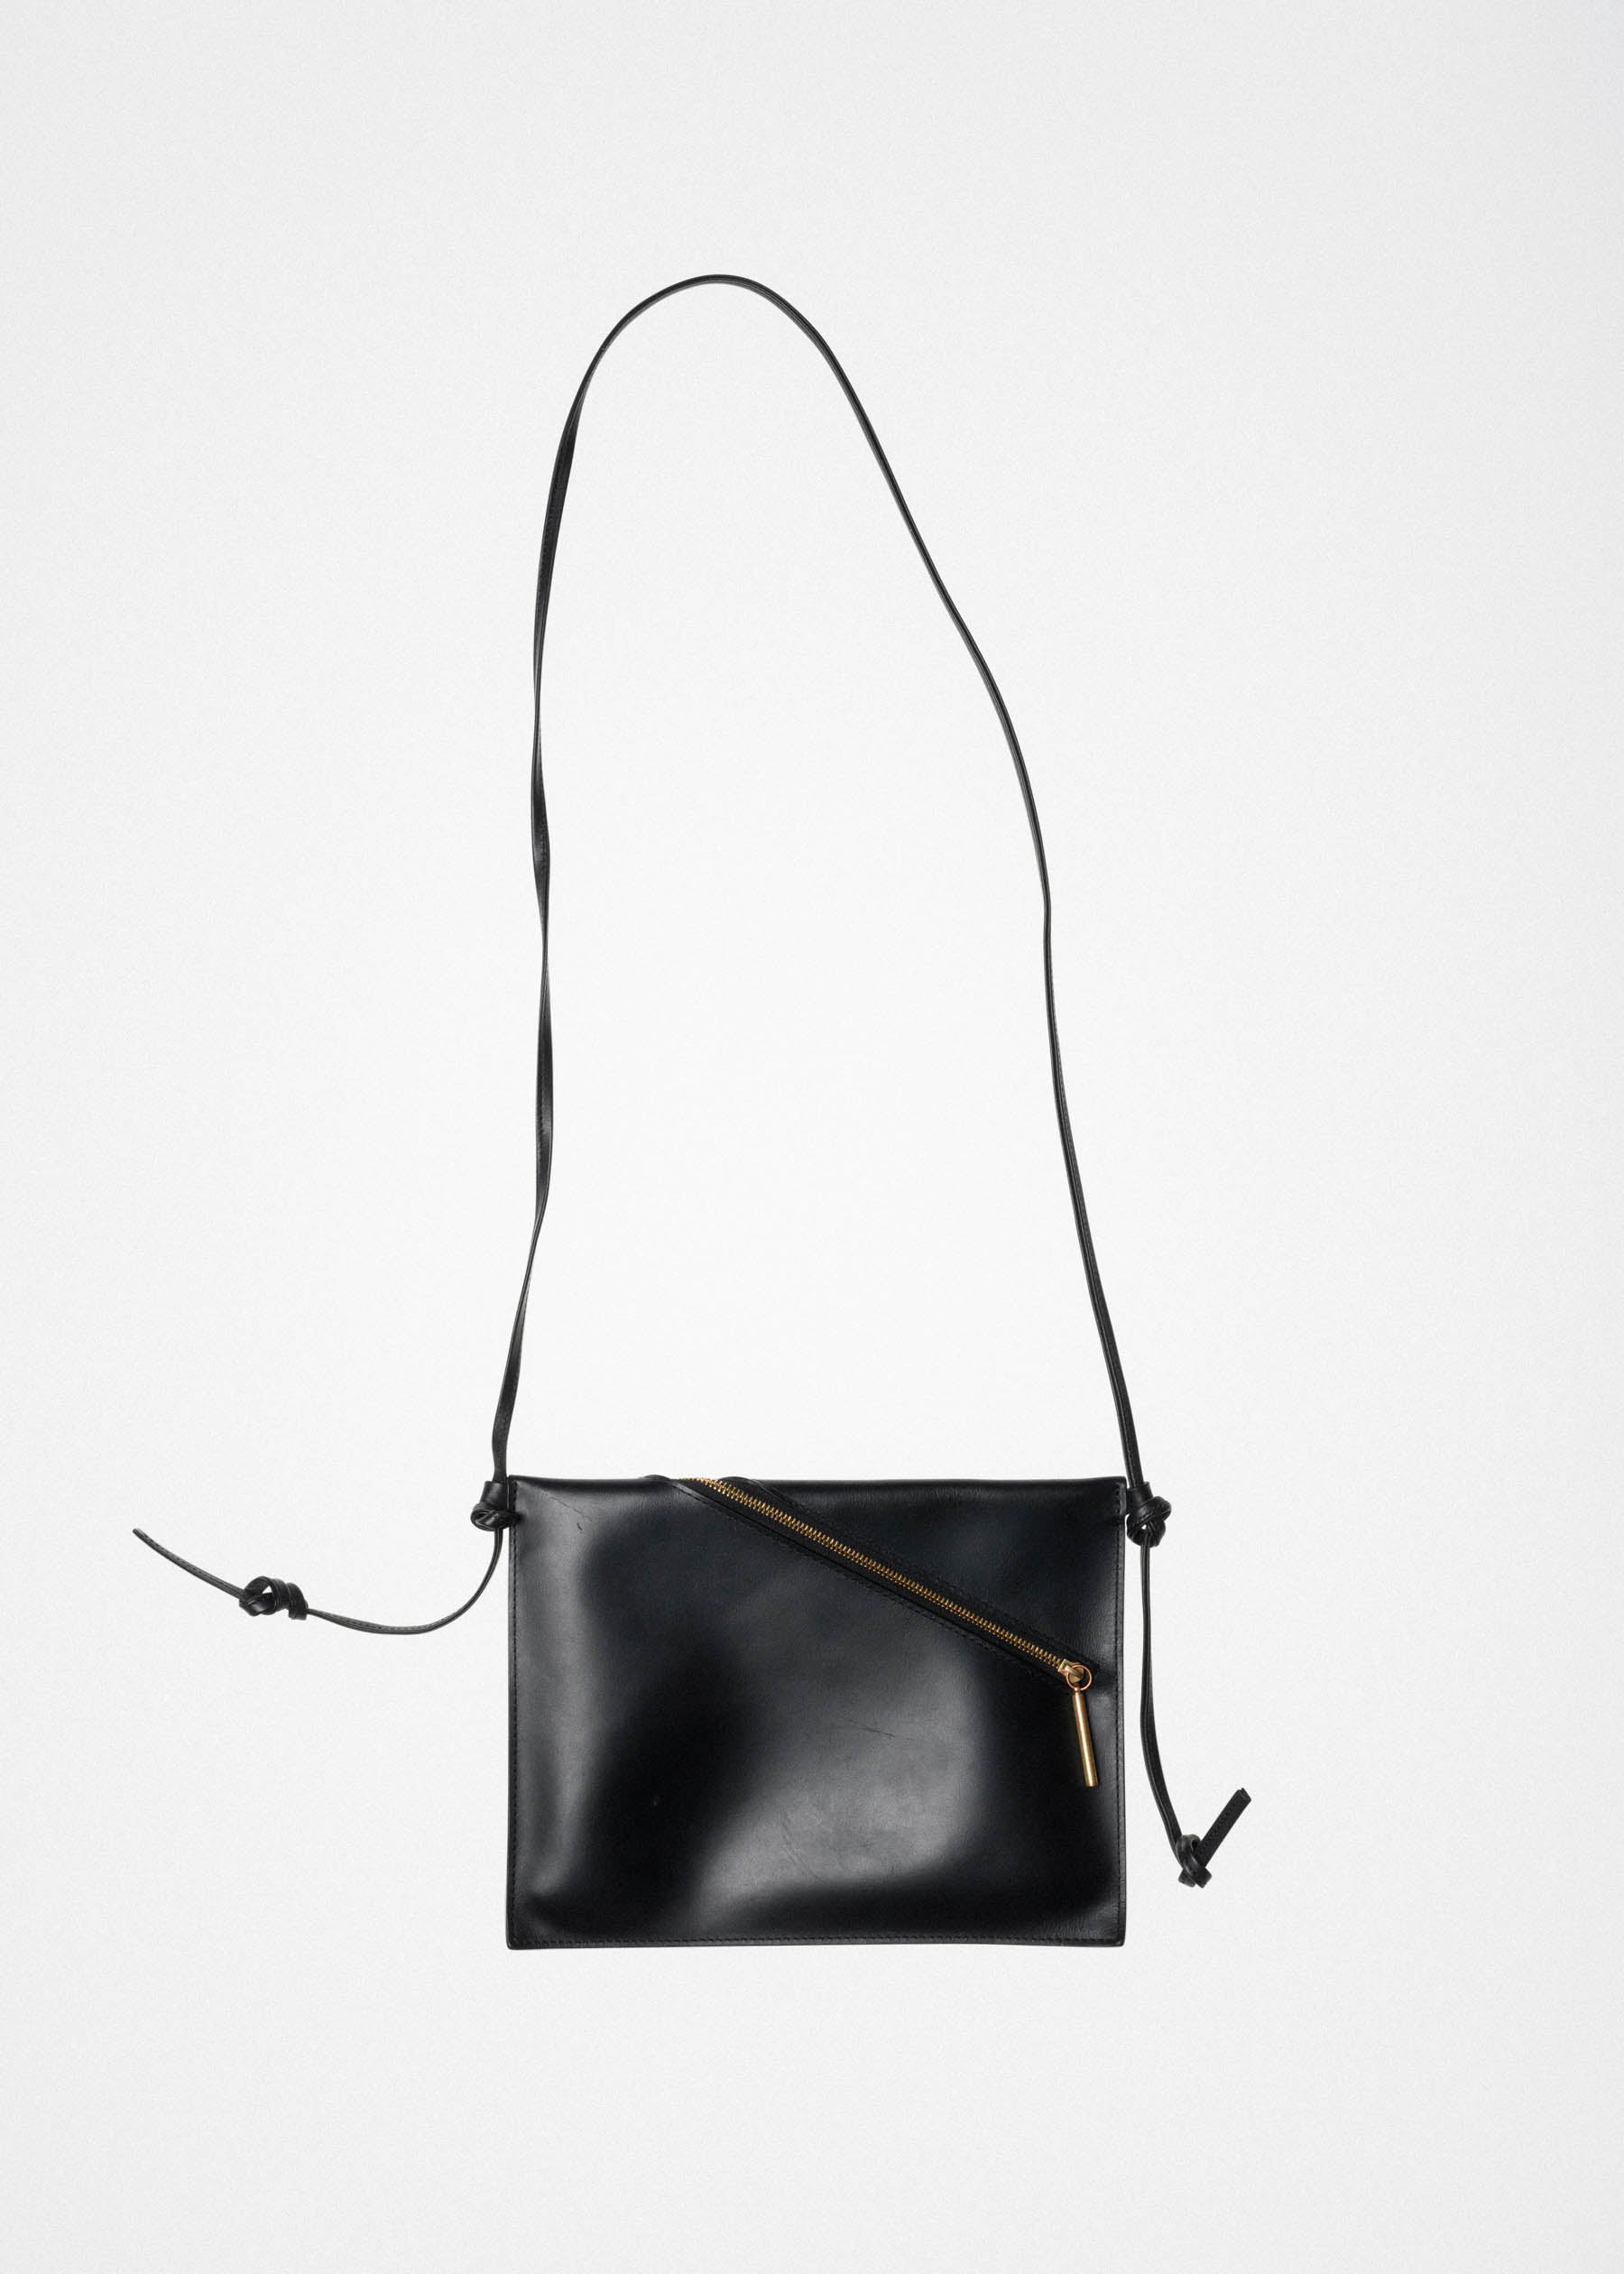 Modern leather sacoche – 0110 in black - PB0110 PB